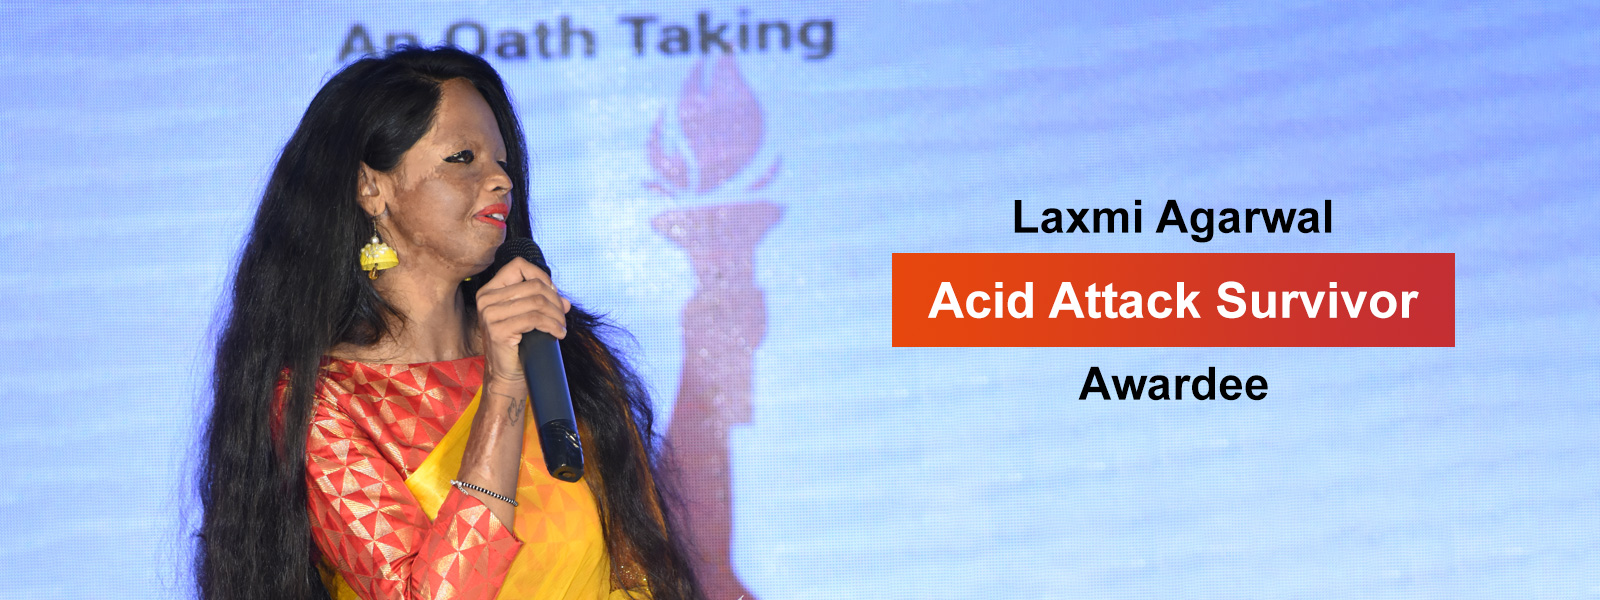 PRATIGYA - An Oath Taking Ceremony and Social Impact Awards - Laxmi Agarwal